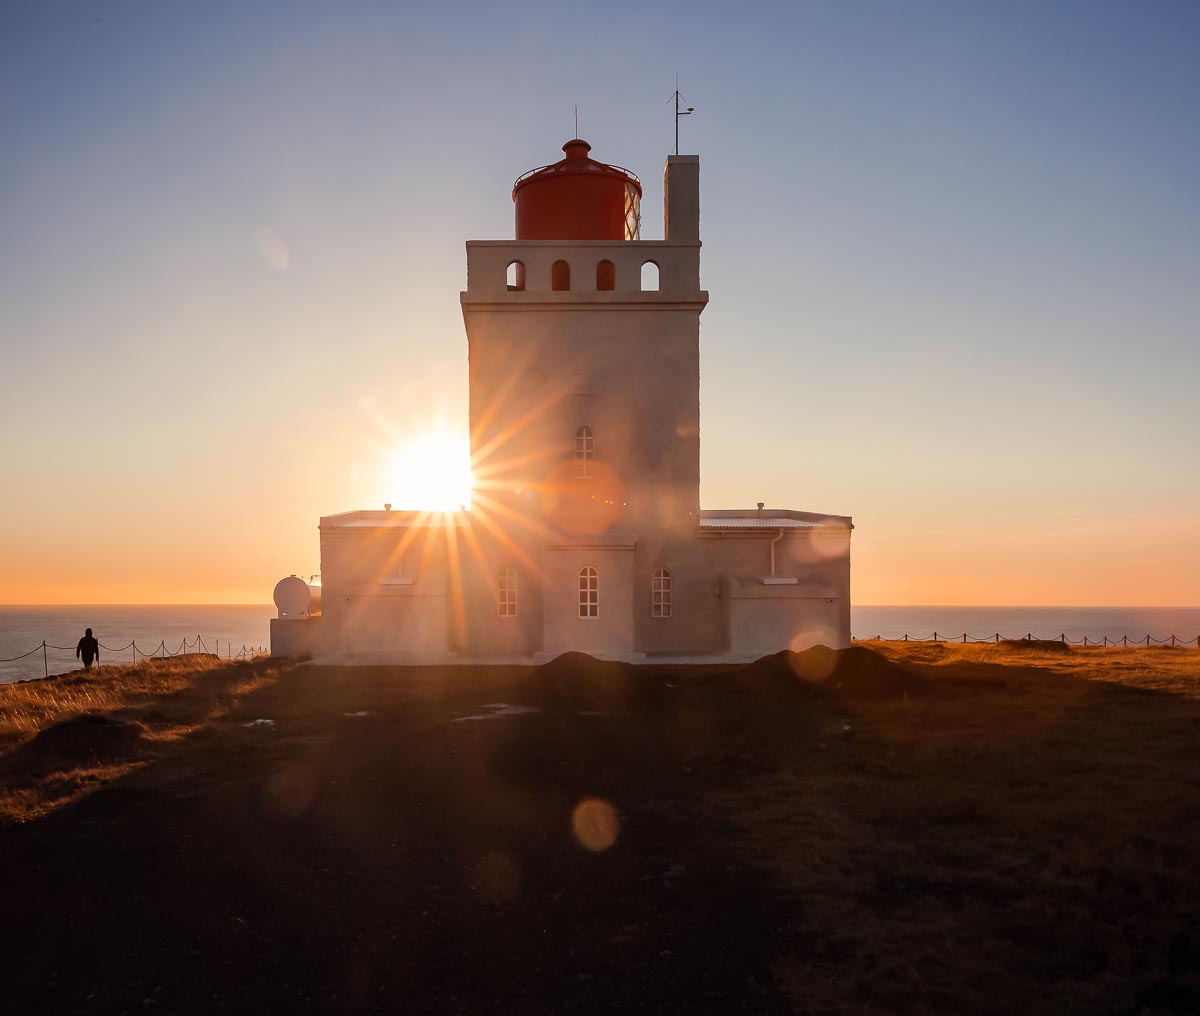 Sonnenuntergang am Dyrhólaey Leuchtturm, Island Fototour Winter 2022